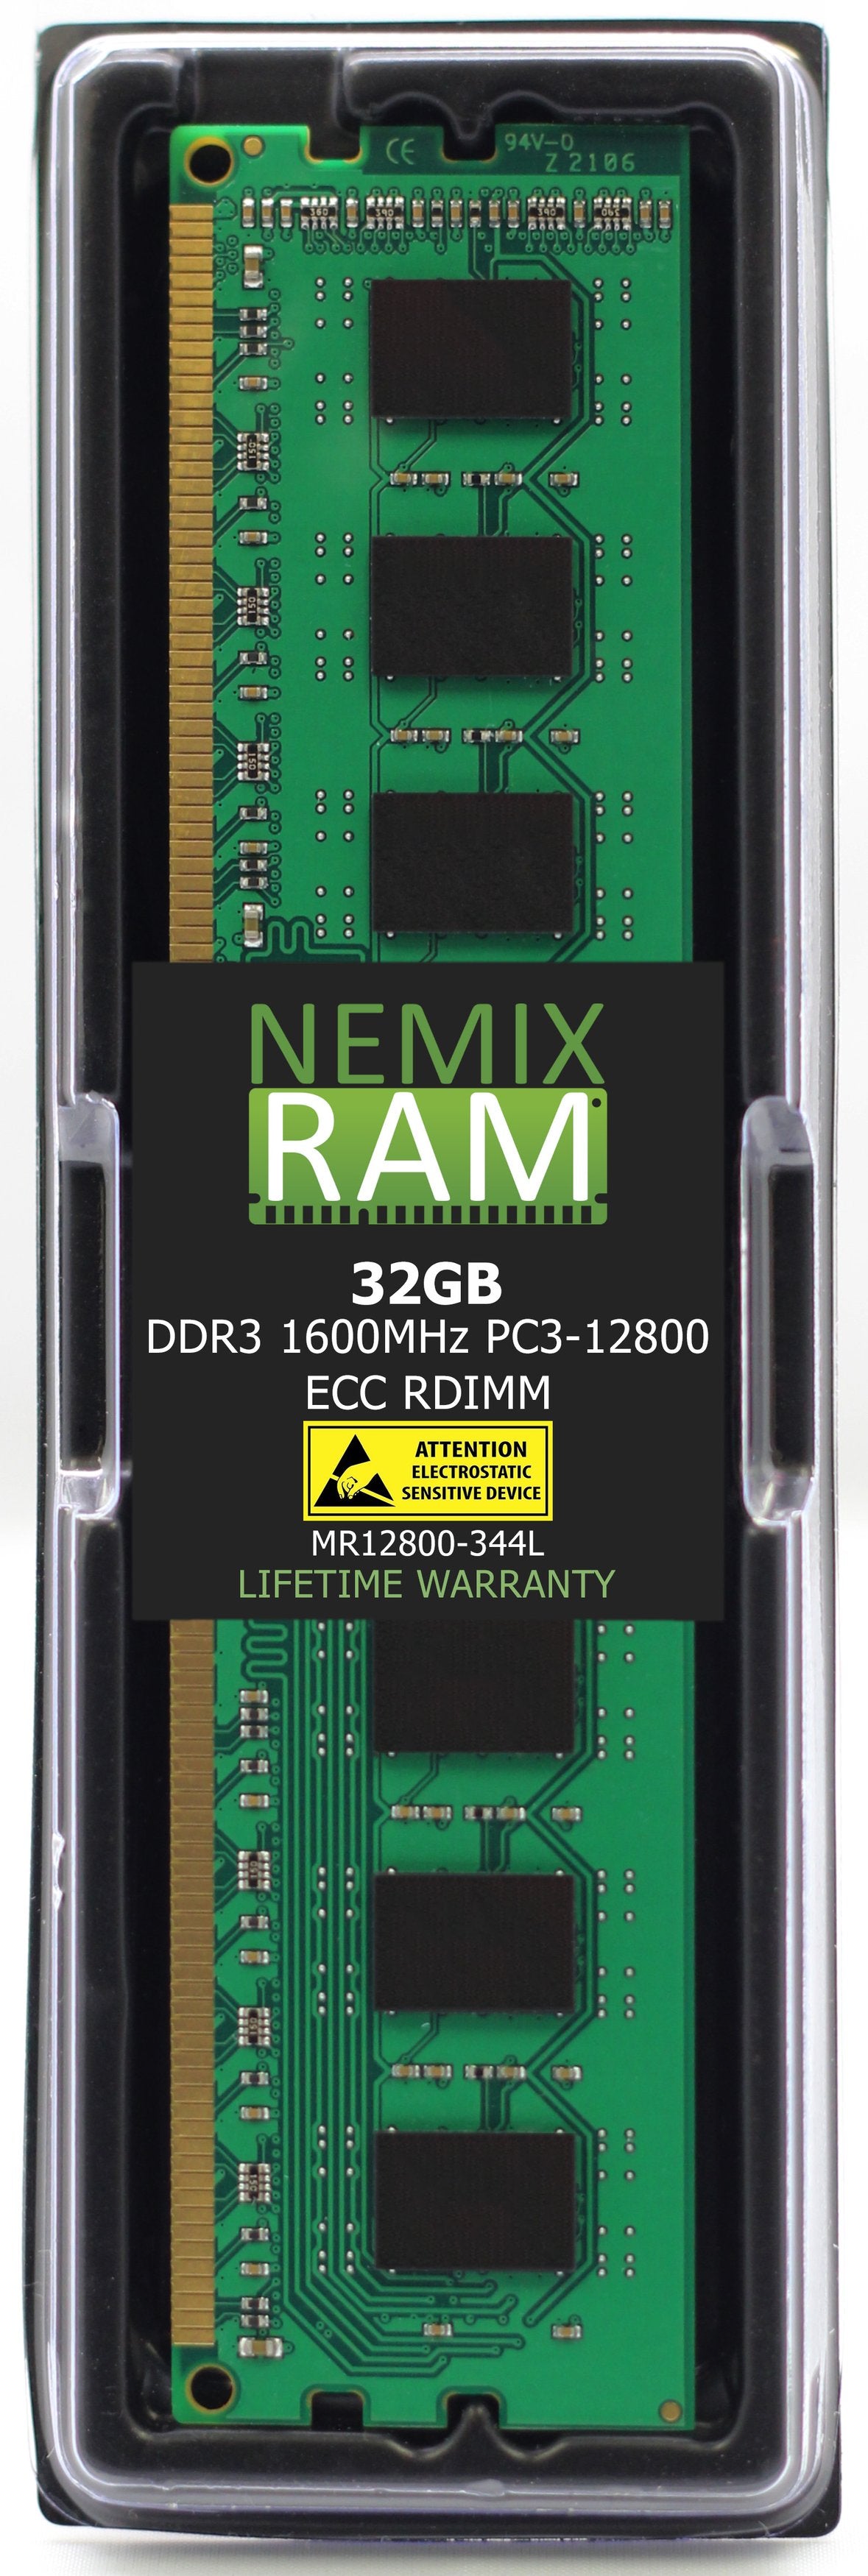 Hynix HMT84GR7BMR4A-PB 32GB DDR3 1600MHZ PC3-12800 RDIMM Compatible Memory Module